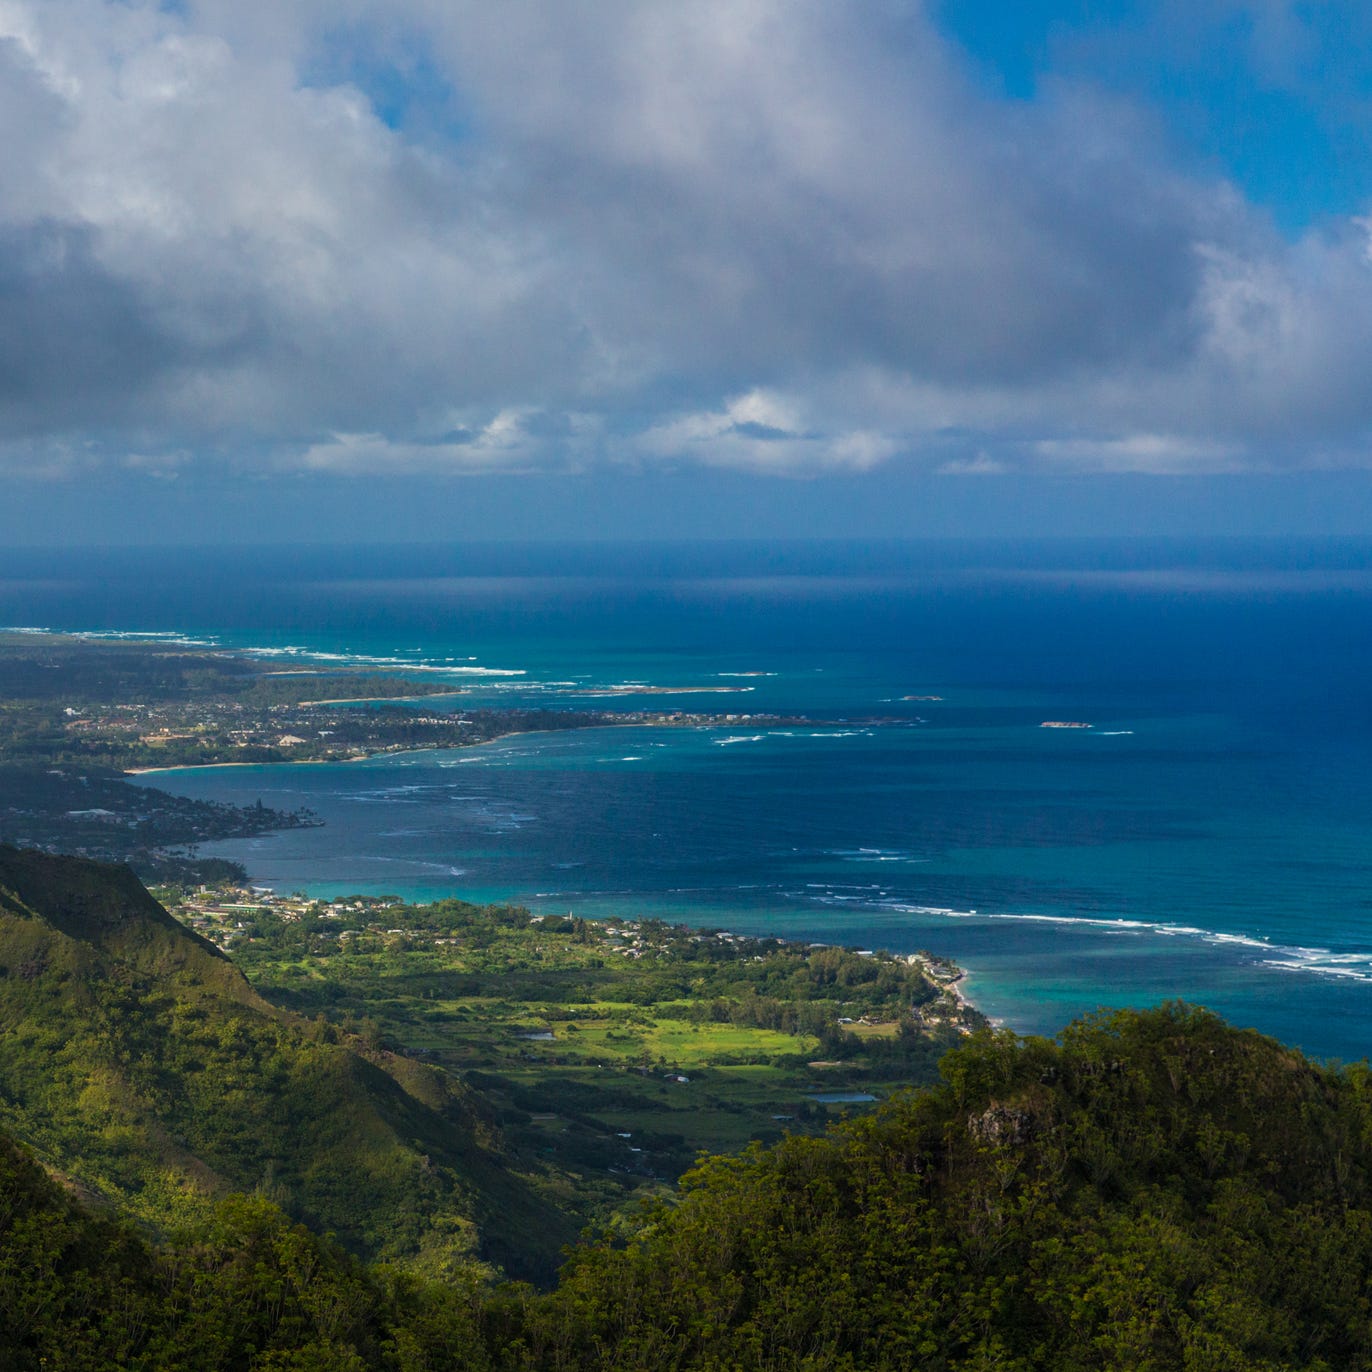 Looking North along the Windward Oahu coast.